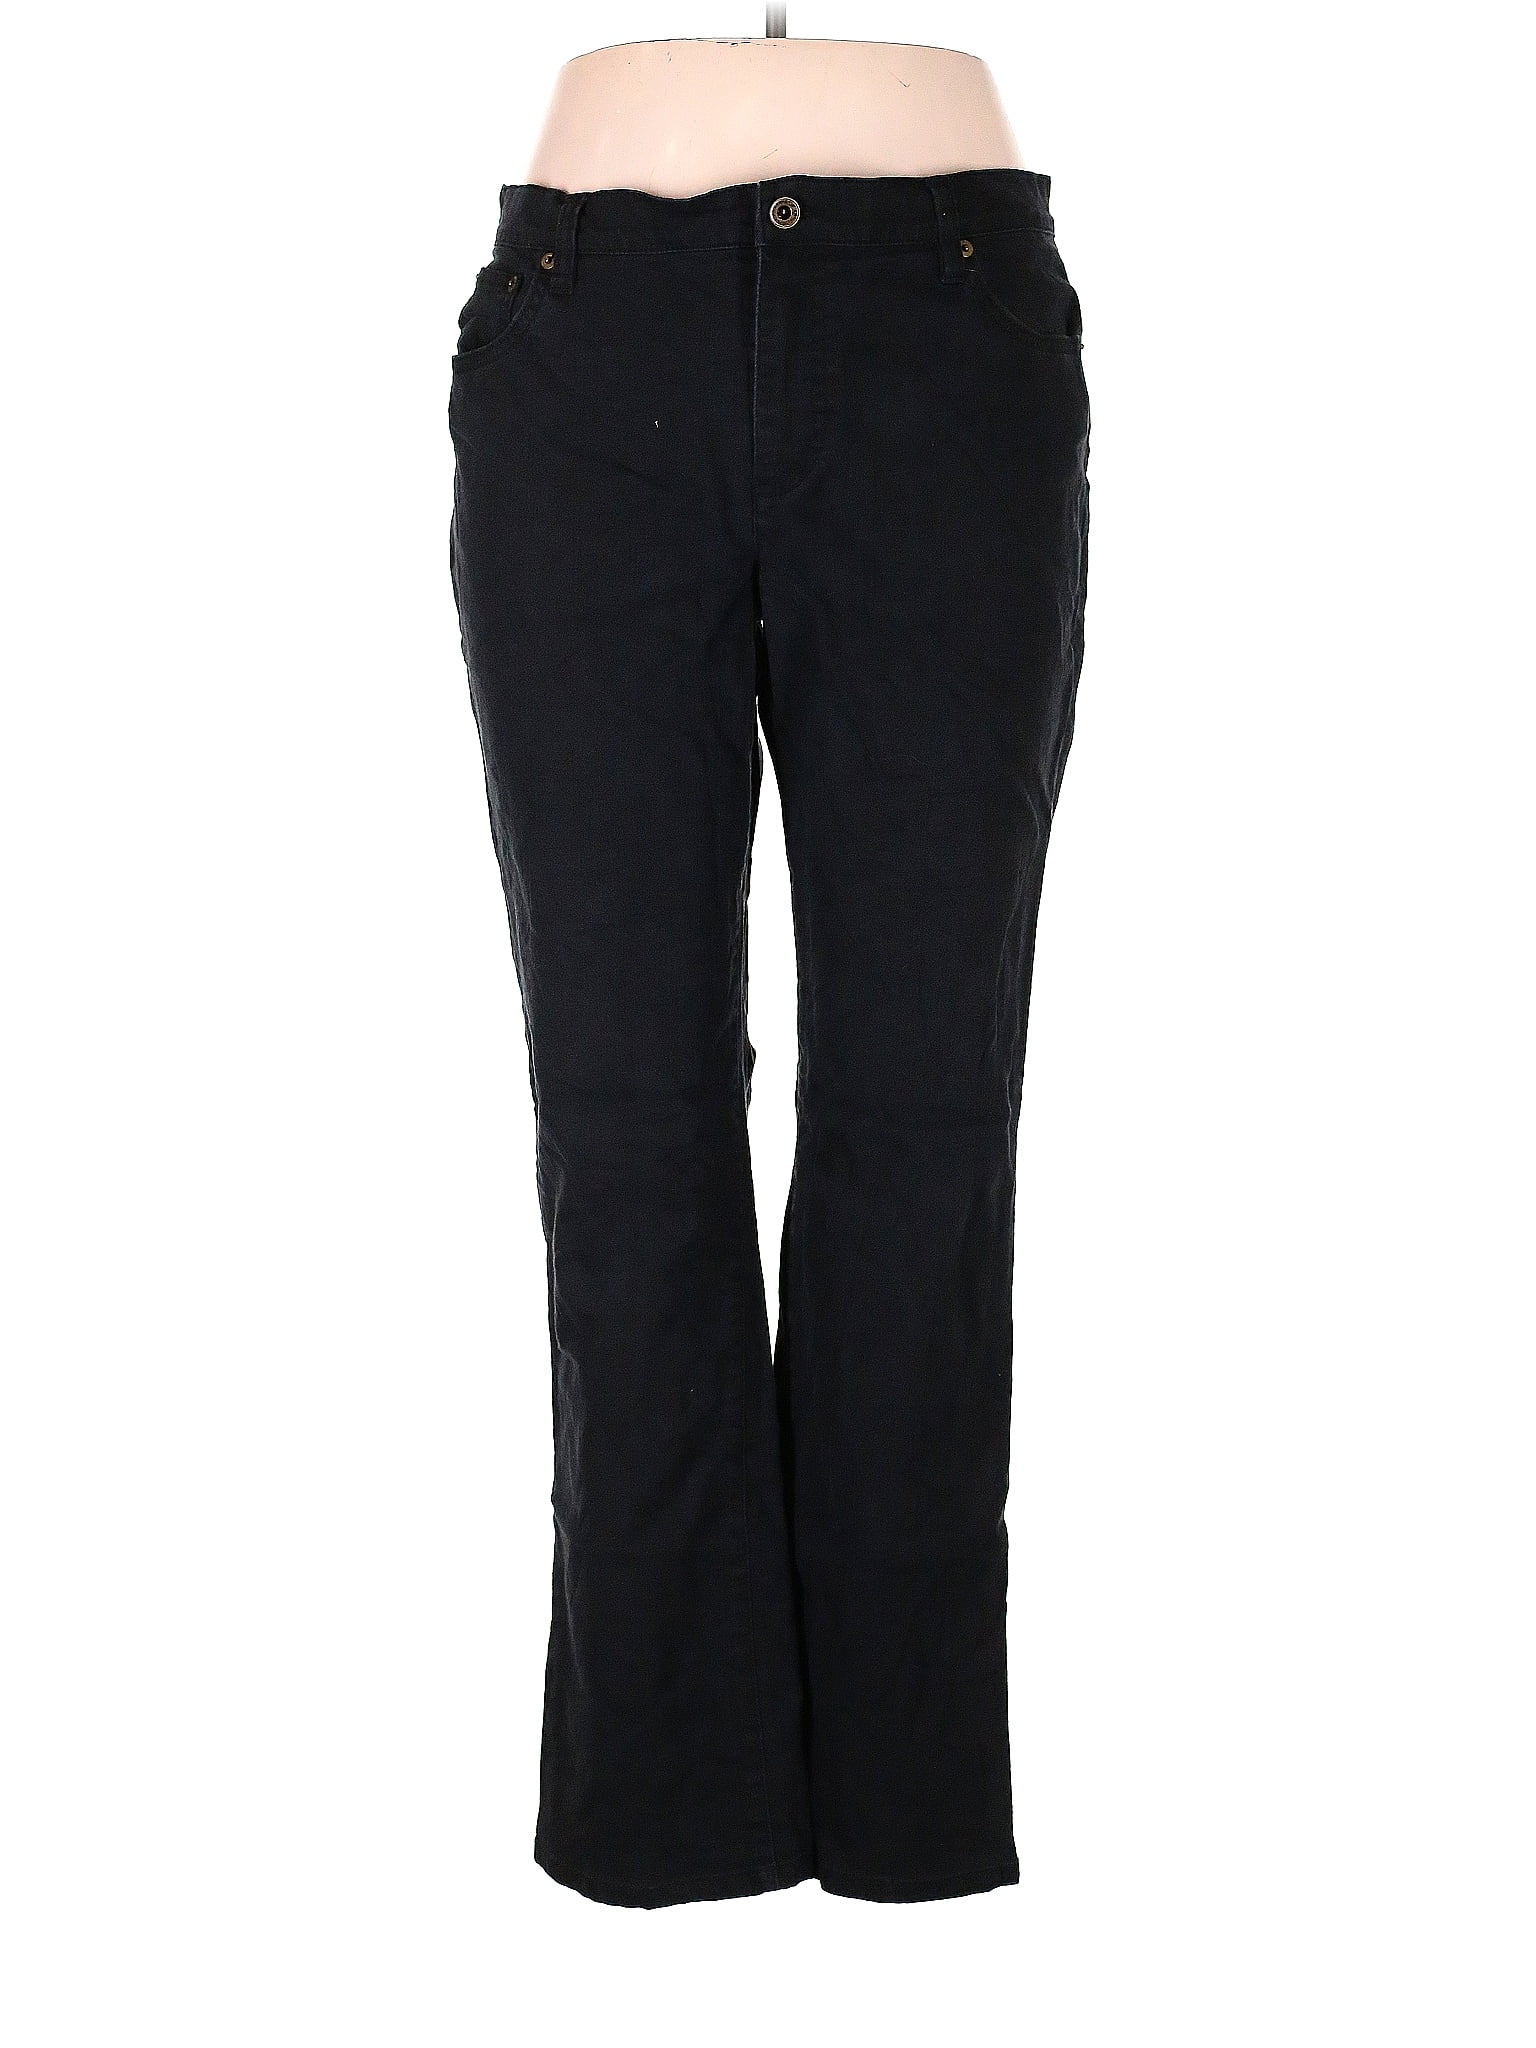 Lauren Jeans Co. 100% Elastane Black Jeans Size 14 - 72% off